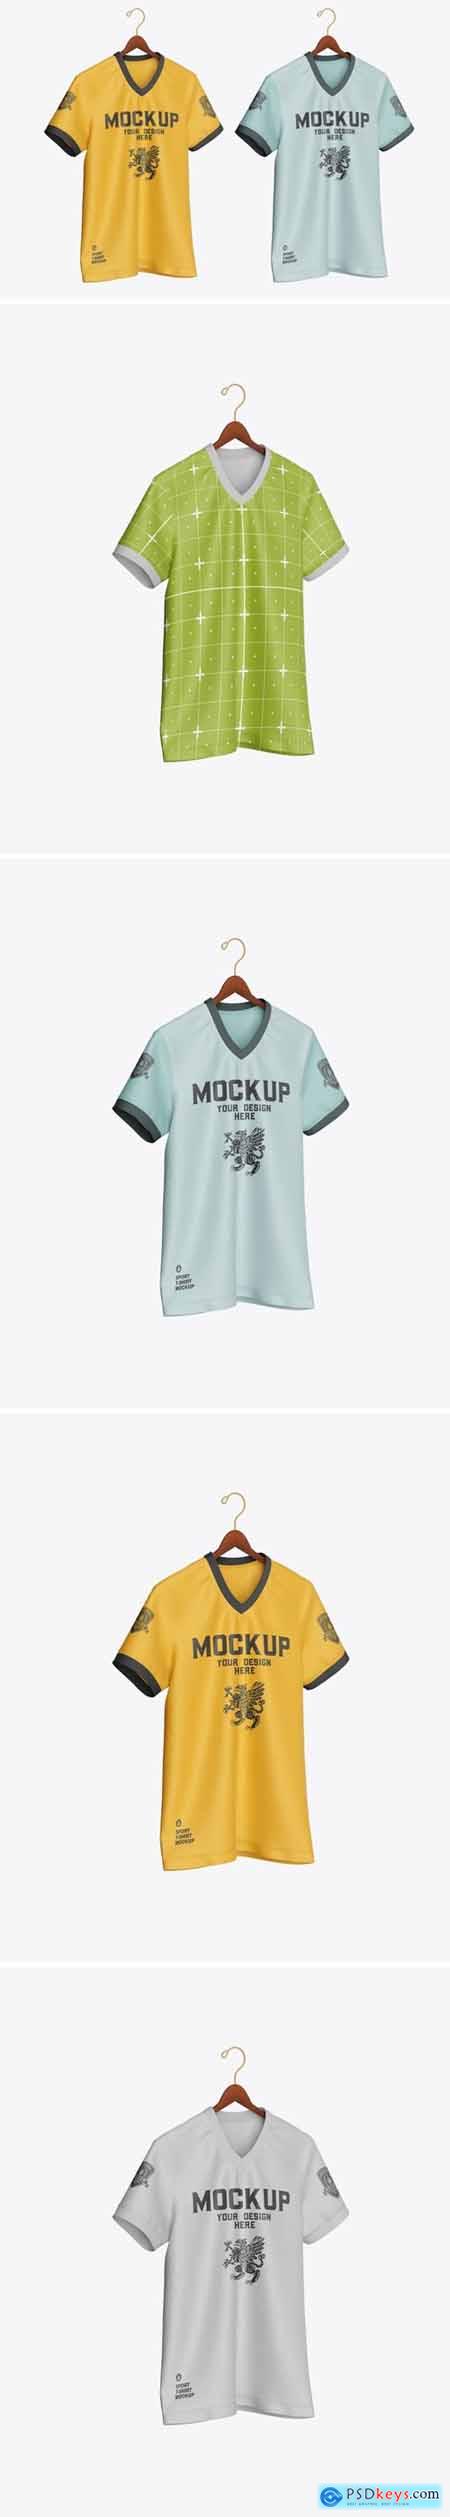 Sports T-shirt Mockup